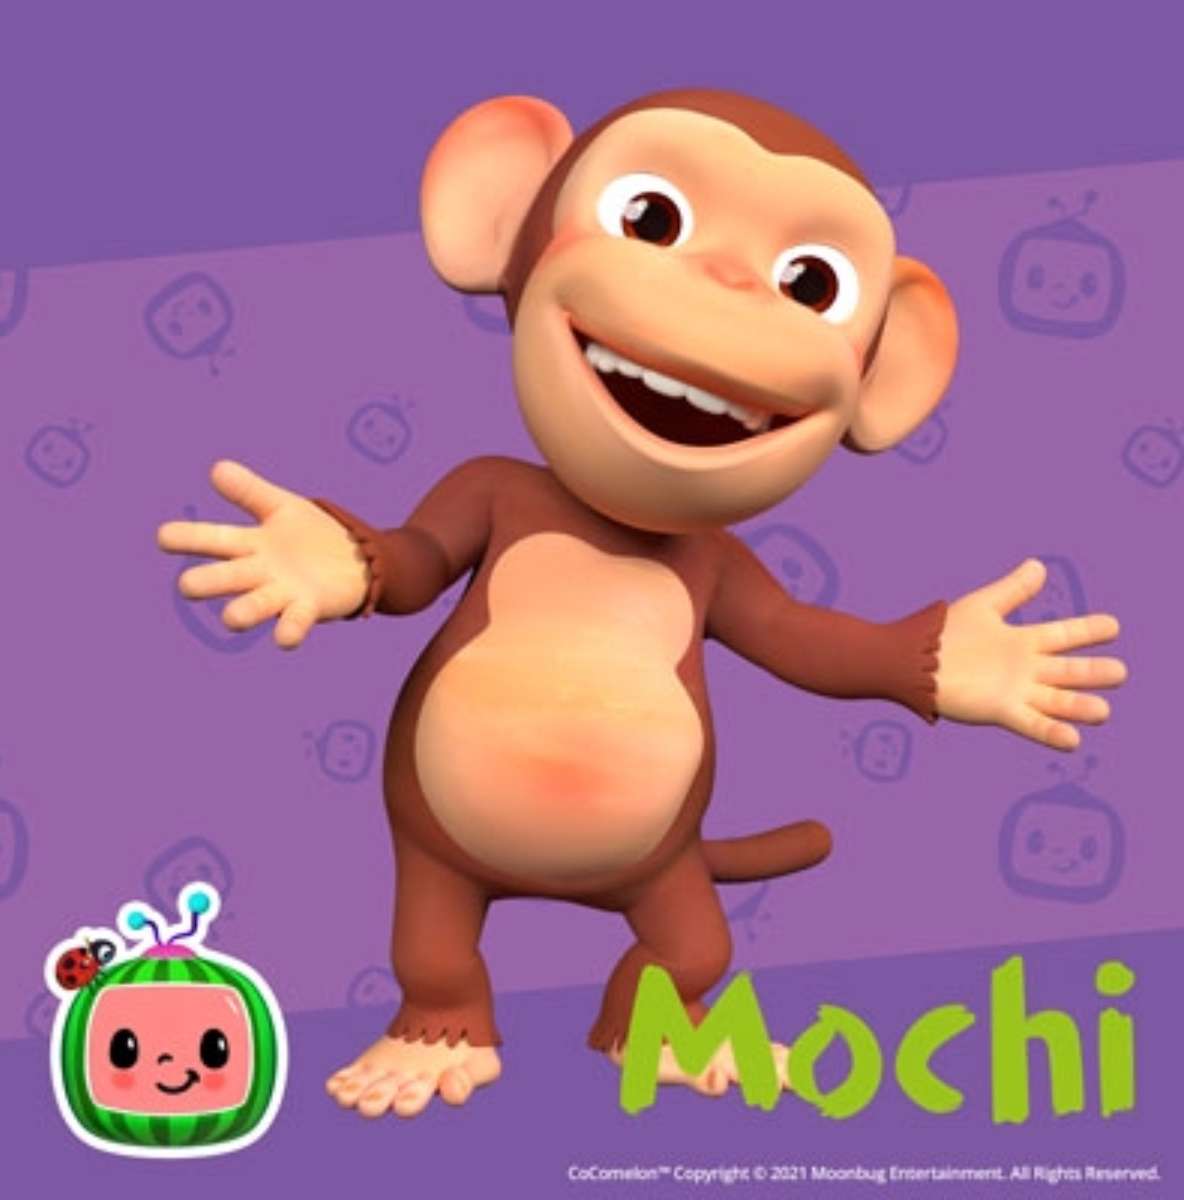 Mochi majom kirakós online